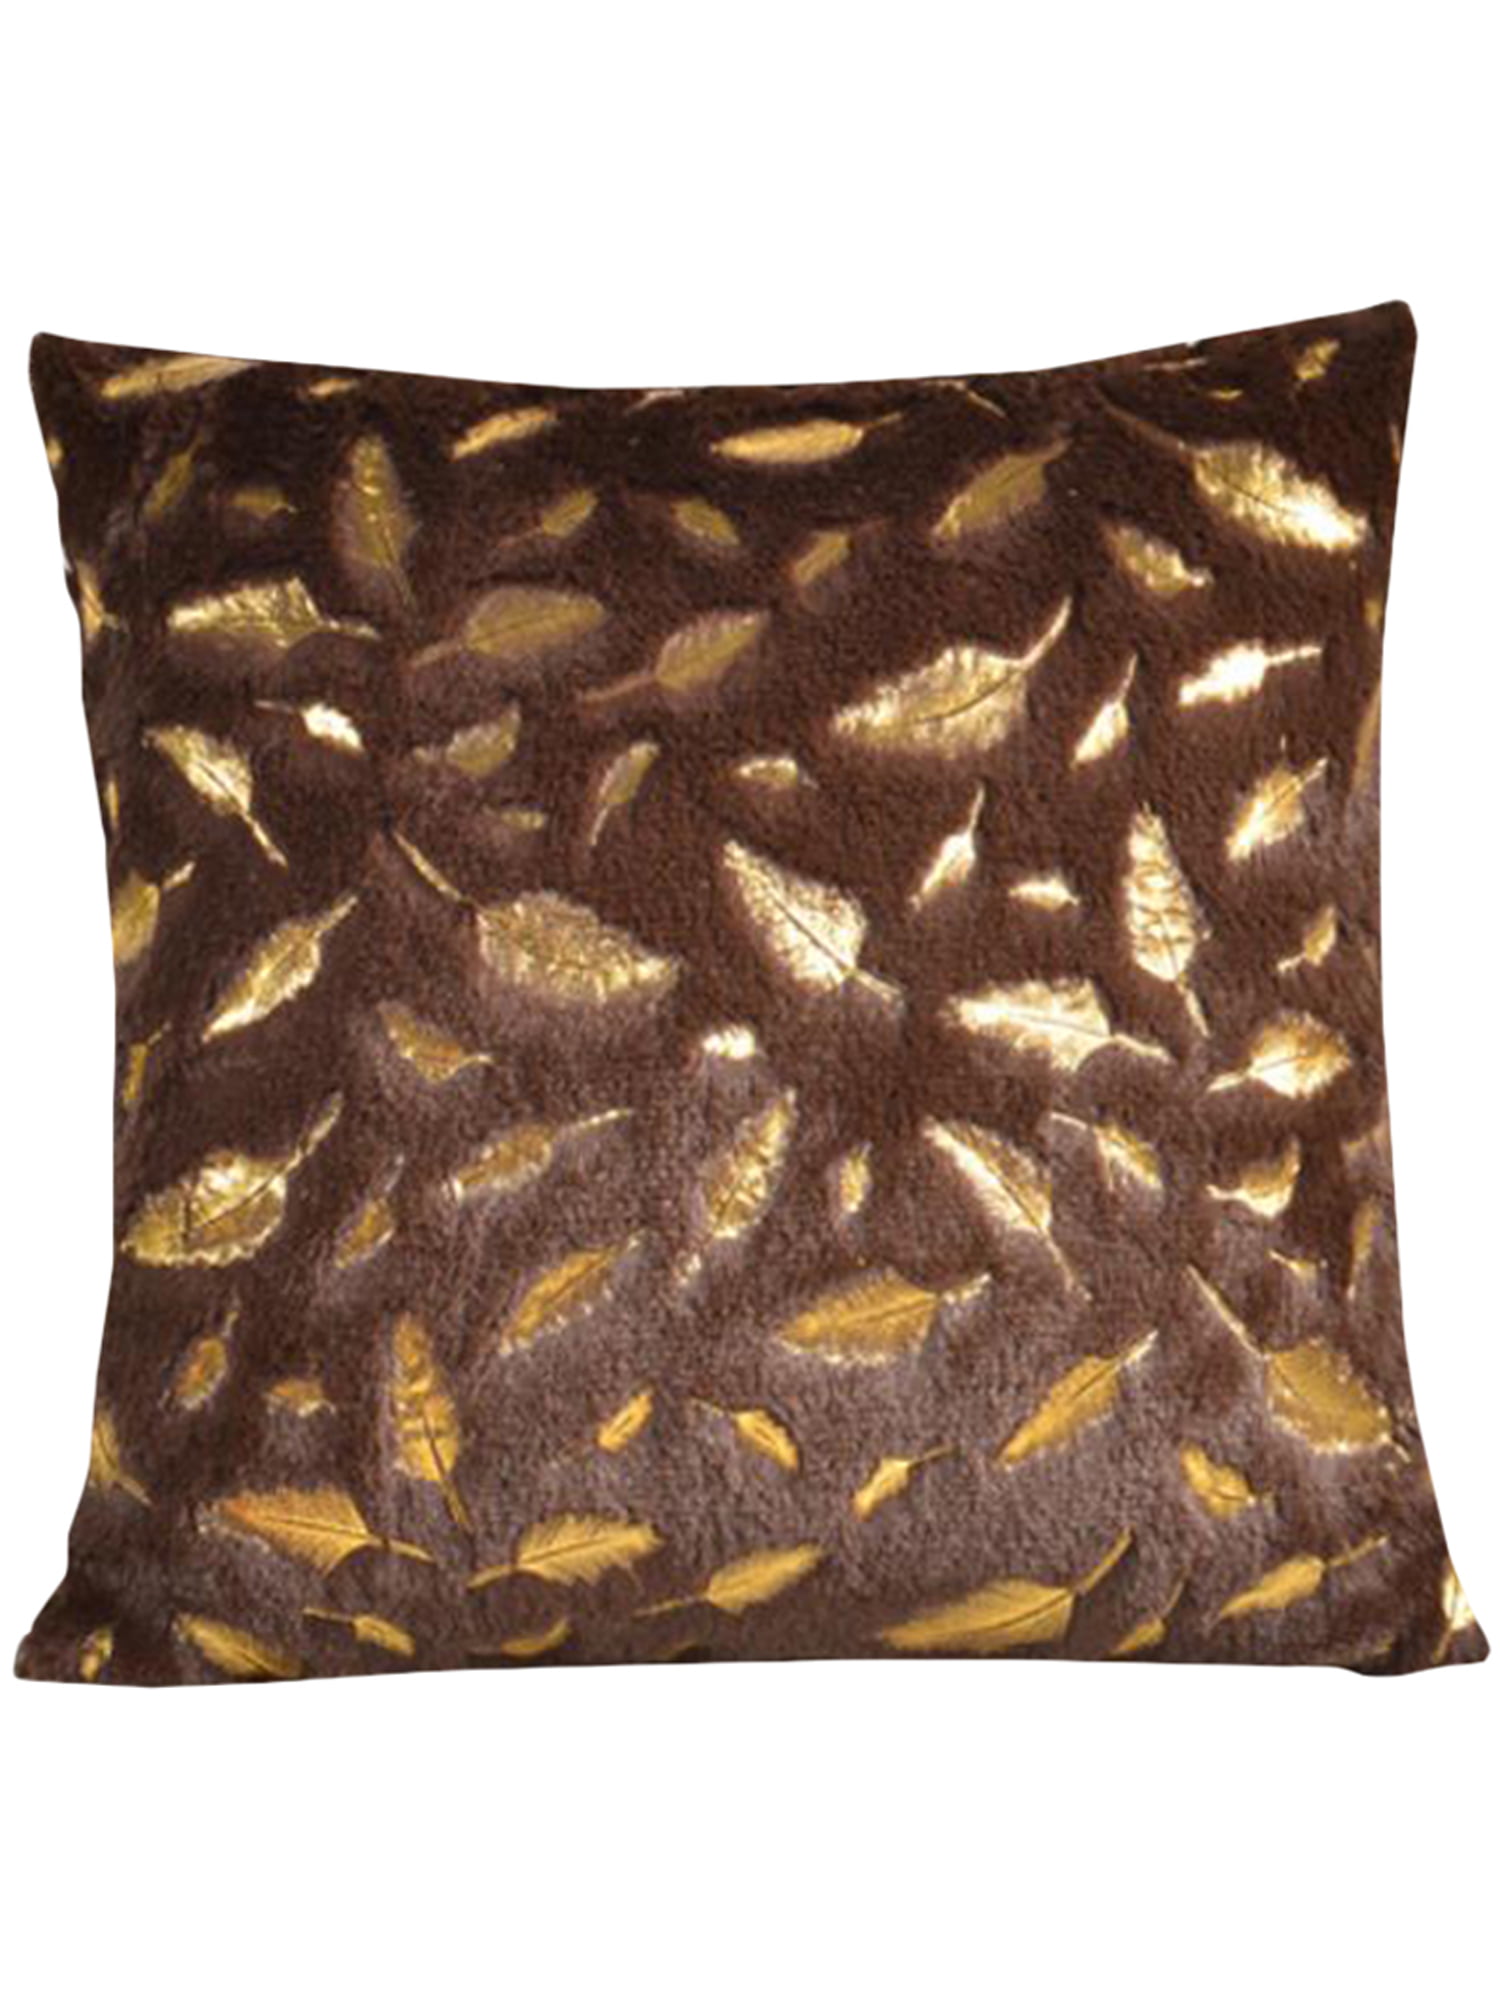 Soft Fur Feather Throw Pillow Case Sofa Cushion Cover Home Decoration HS3